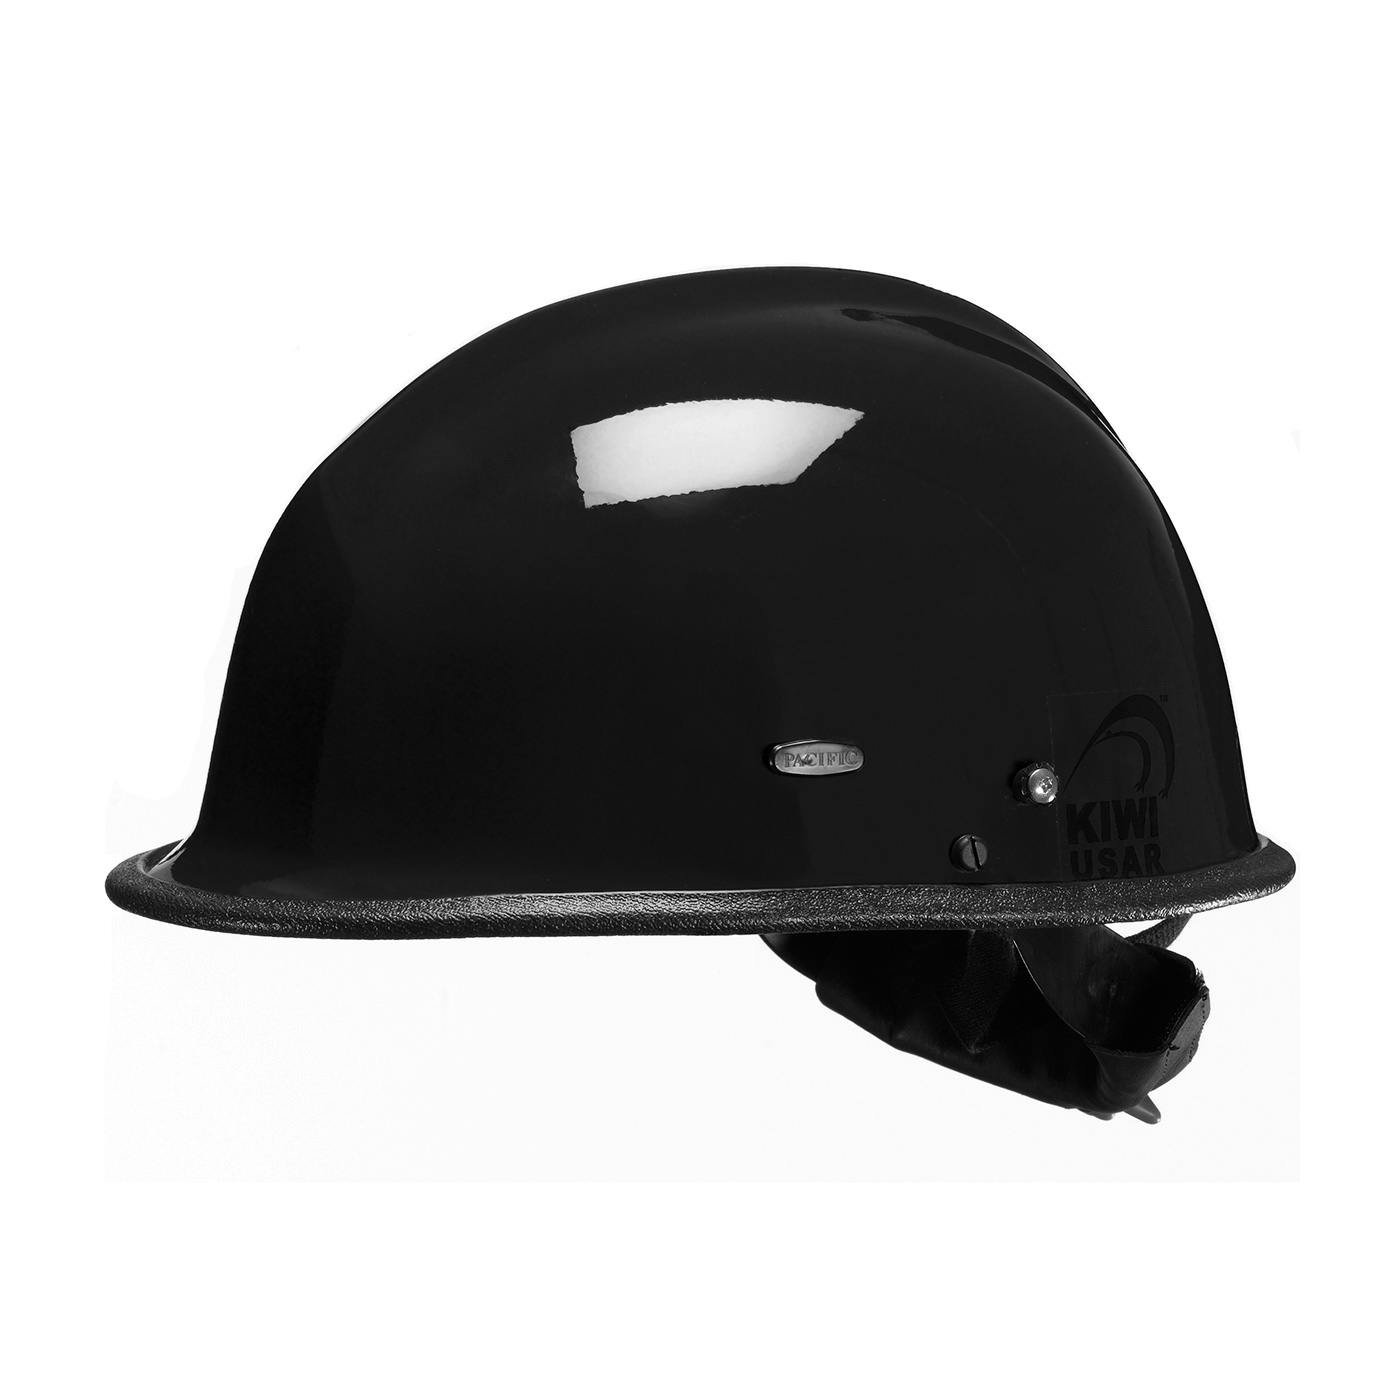 R3 KIWI USAR™ Rescue Helmet with ESS Goggle Mounts (804-341X)